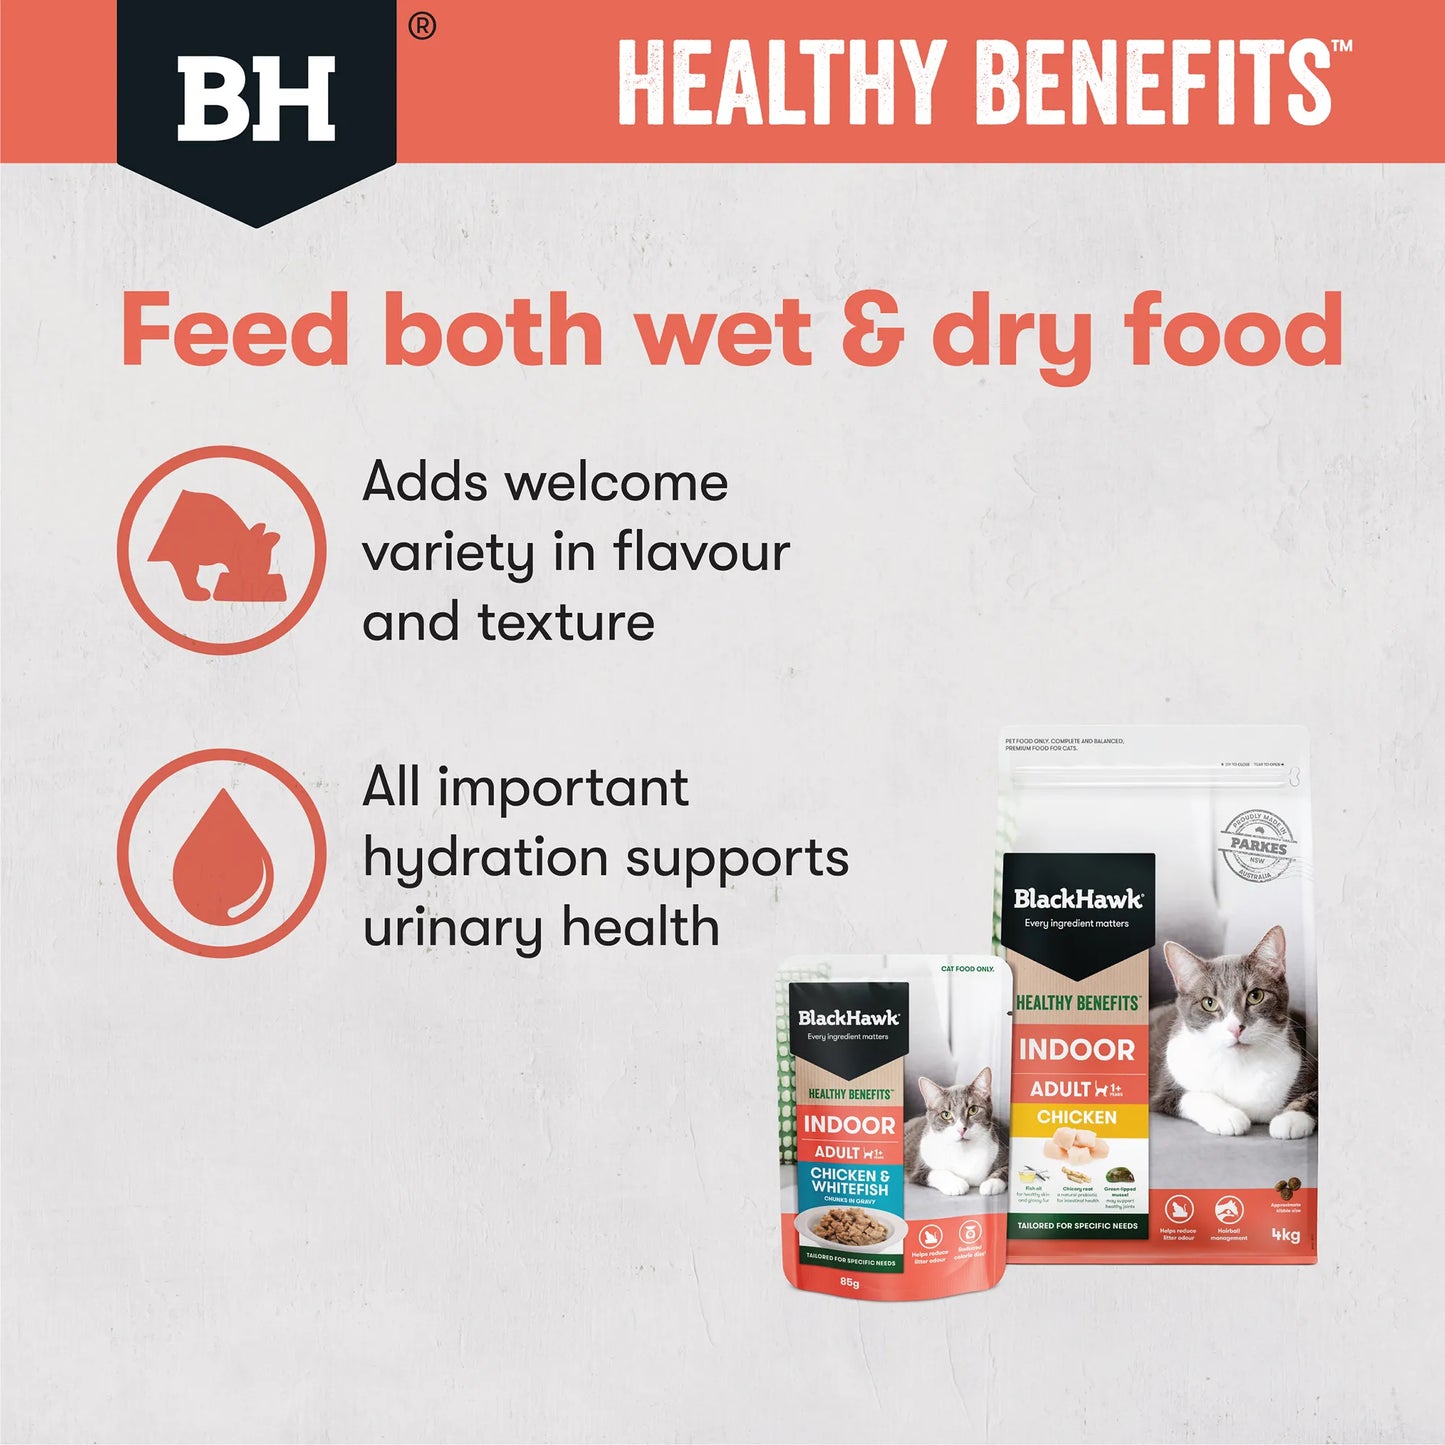 BlackHawk: Cat Indoor Healthy Benefits Chicken, Fish, Gravy Pouch